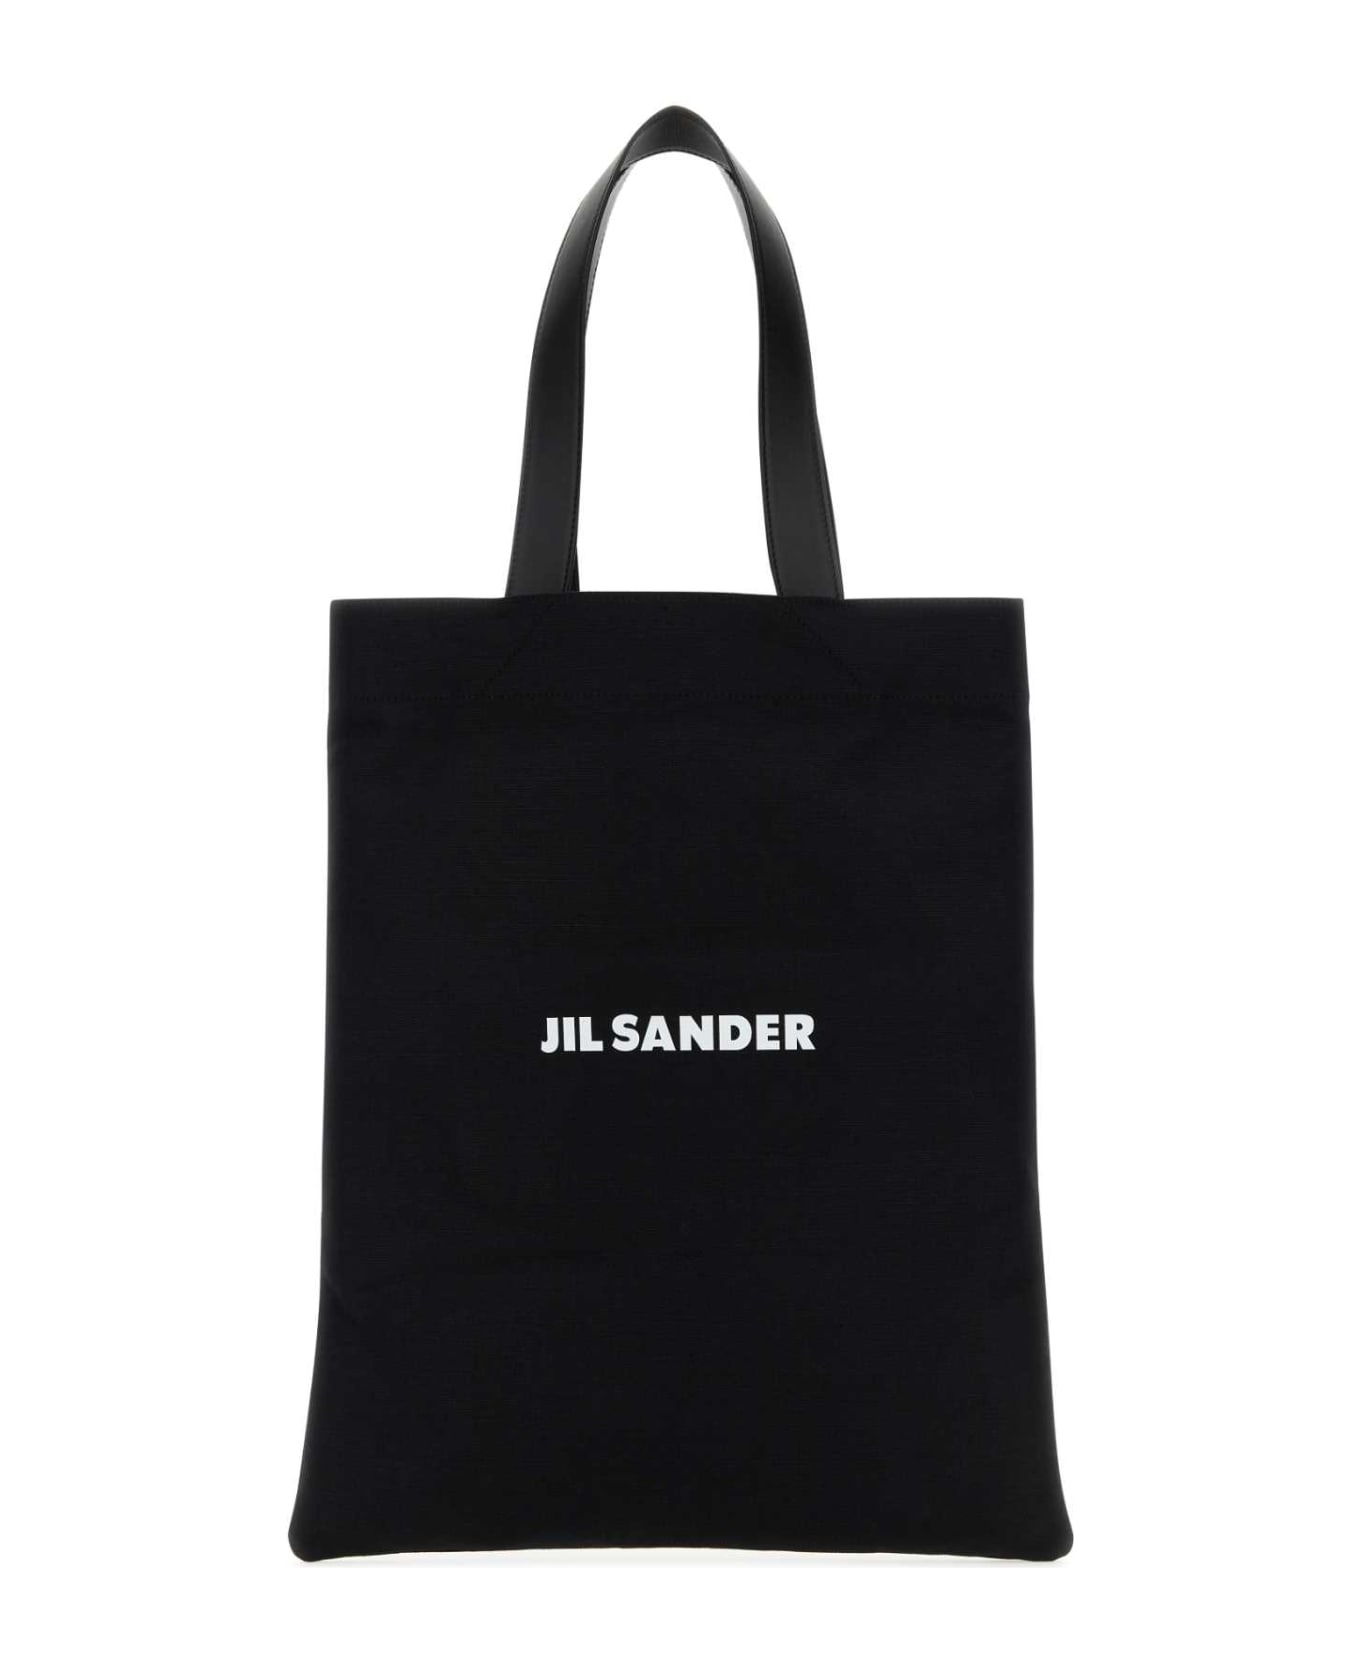 Jil Sander Black Canvas Medium Book Shopping Bag - 001 トートバッグ